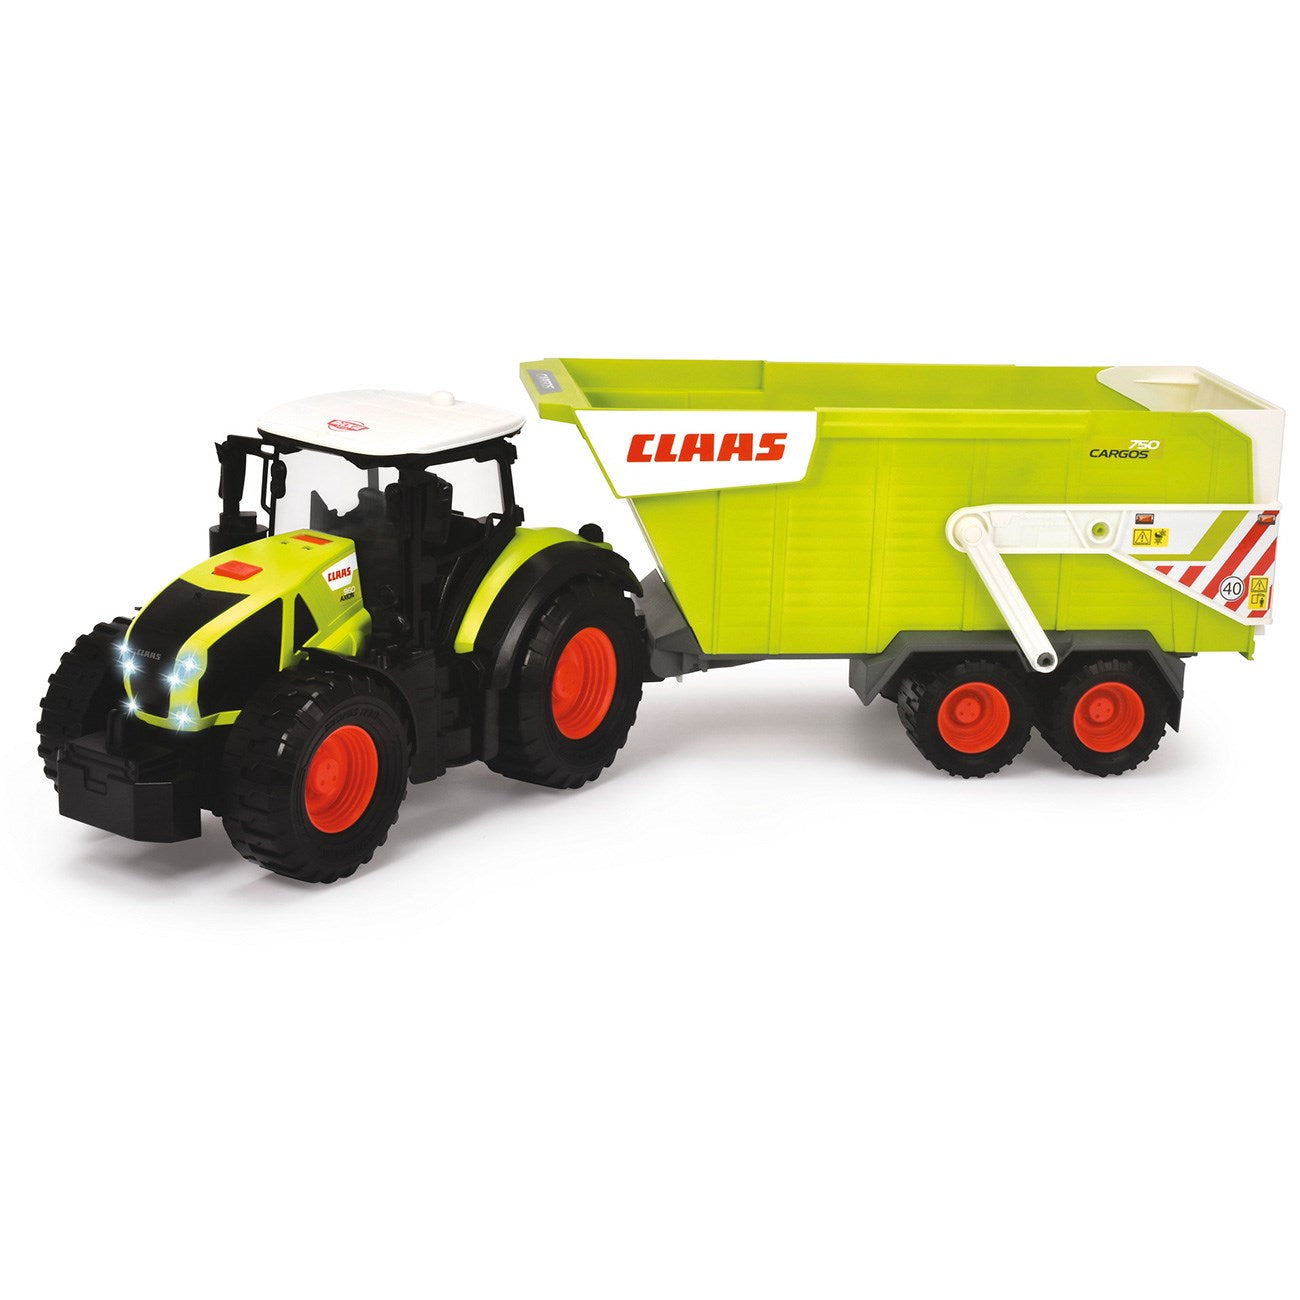 Dickie Toys h CLAAS traktor med Hænger